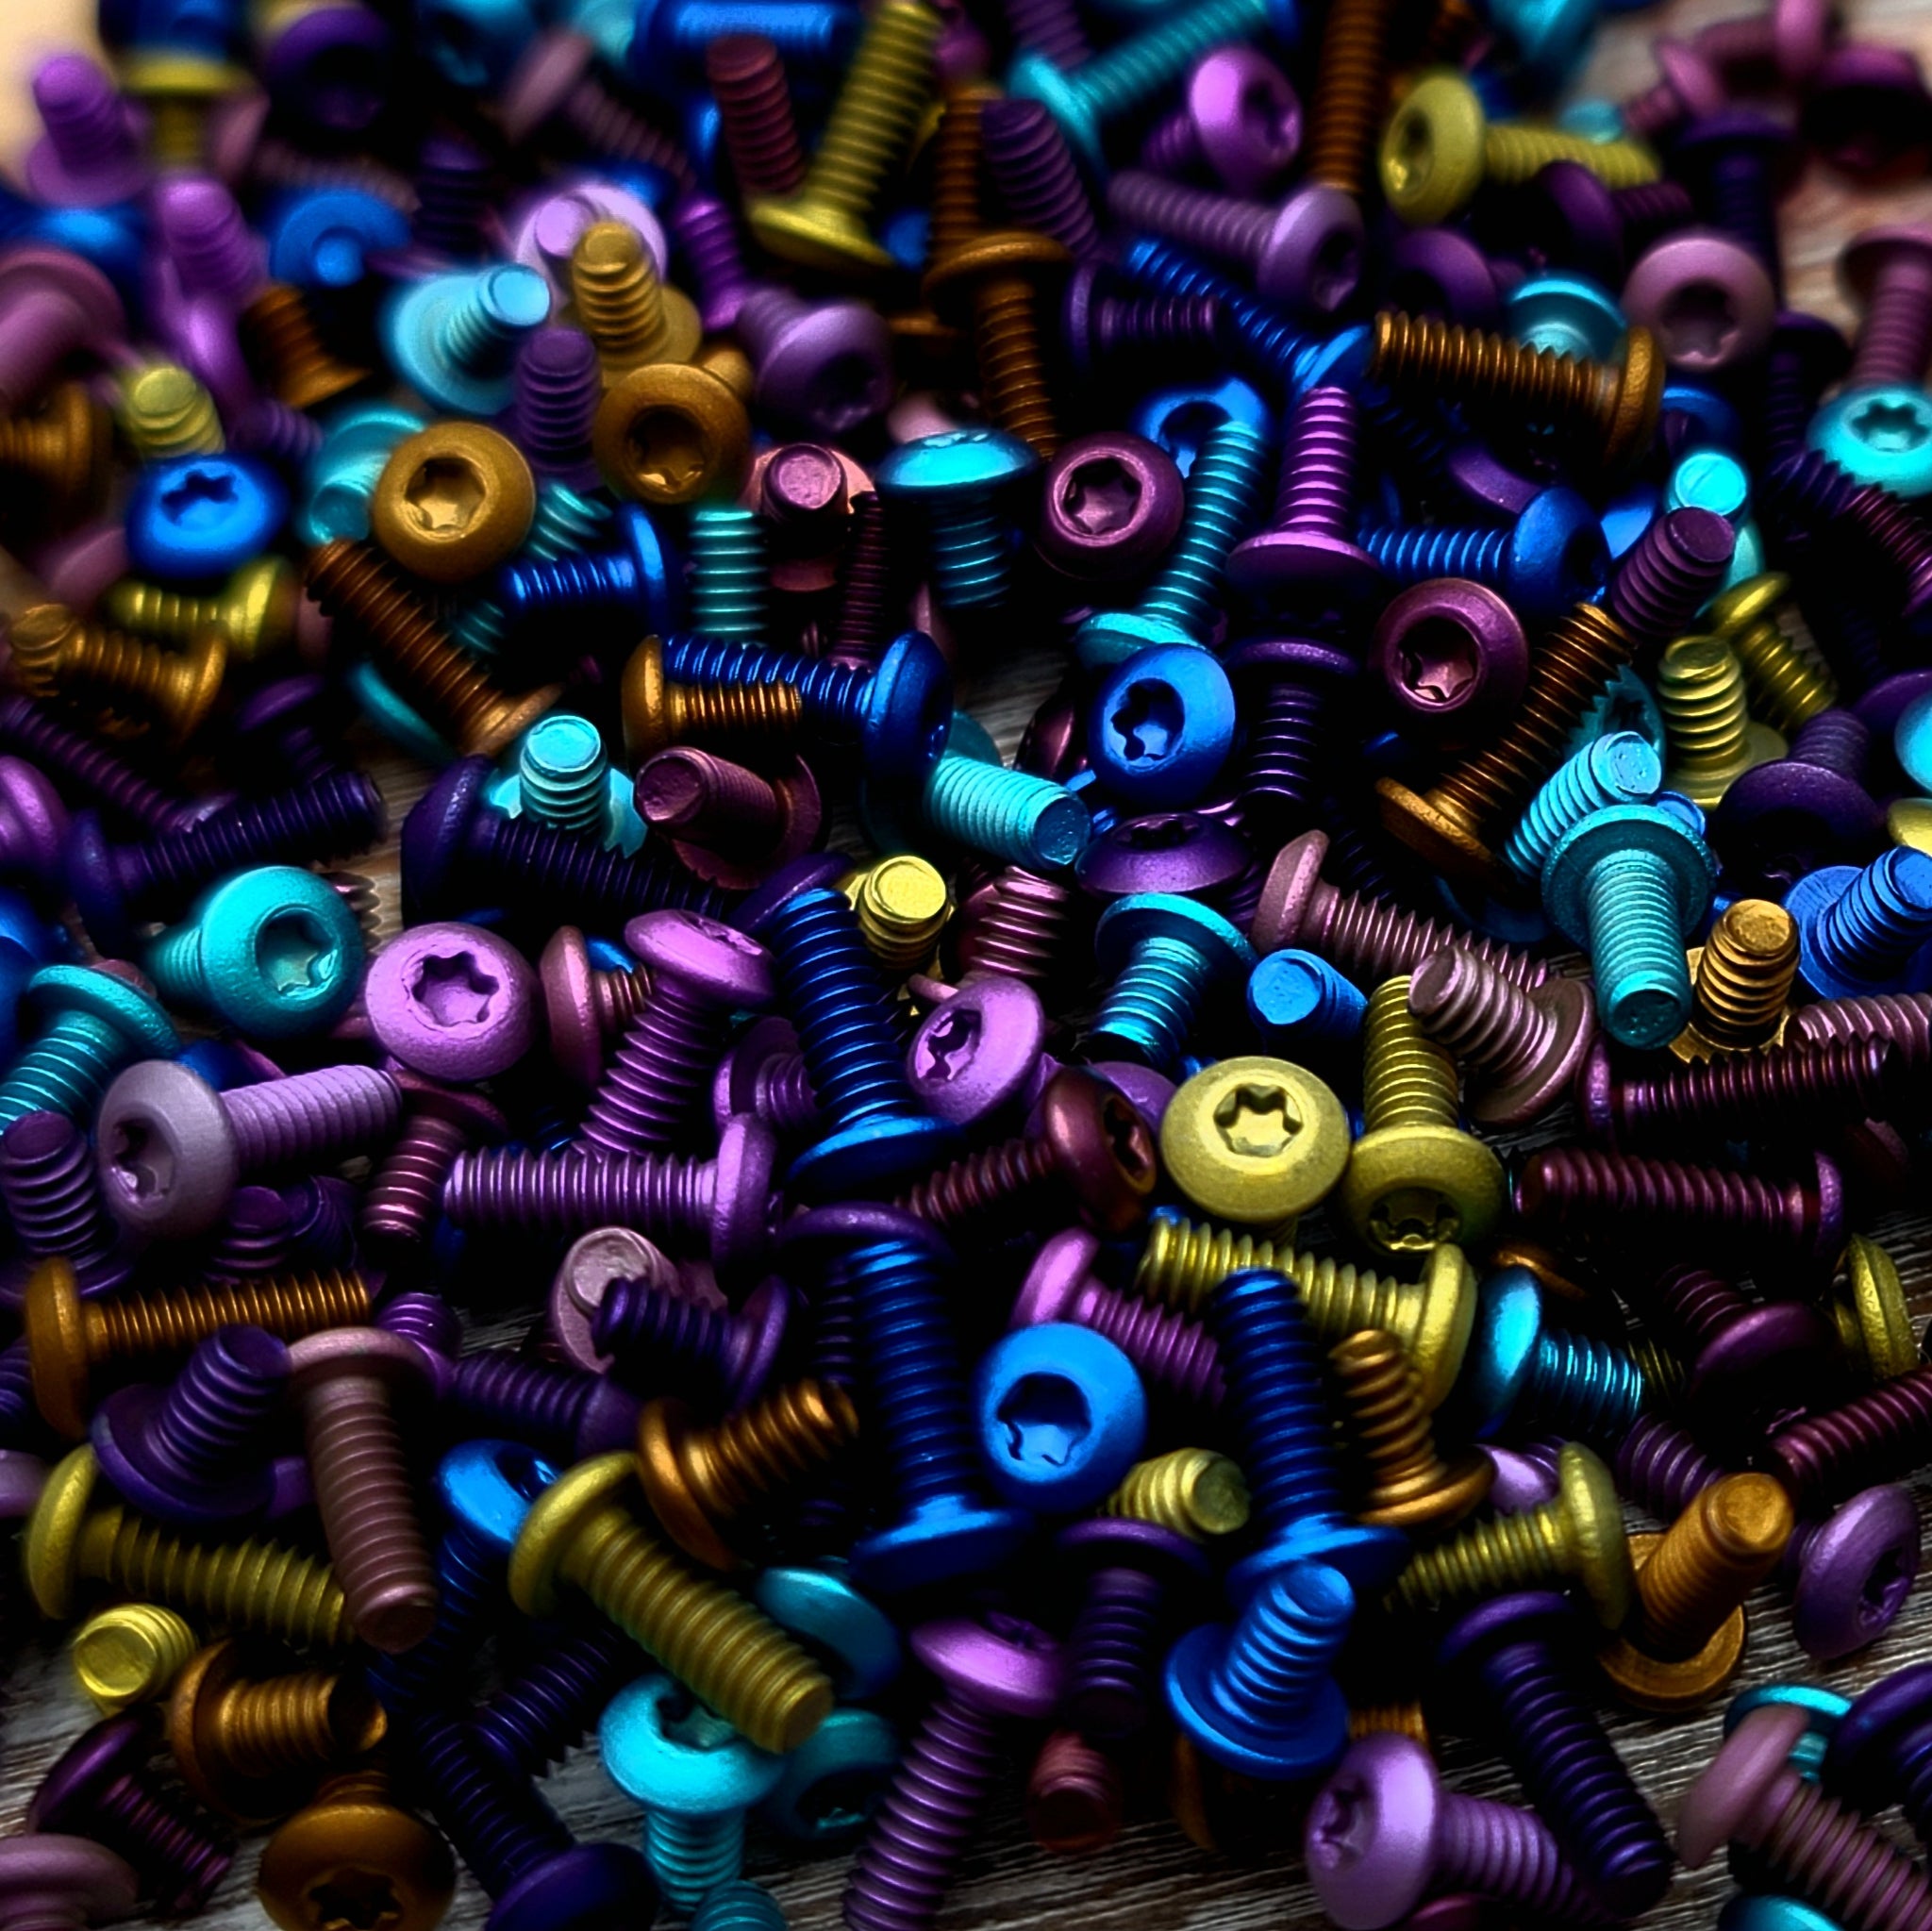 Tiny screws 6mm, HD34 - Colorway Arts